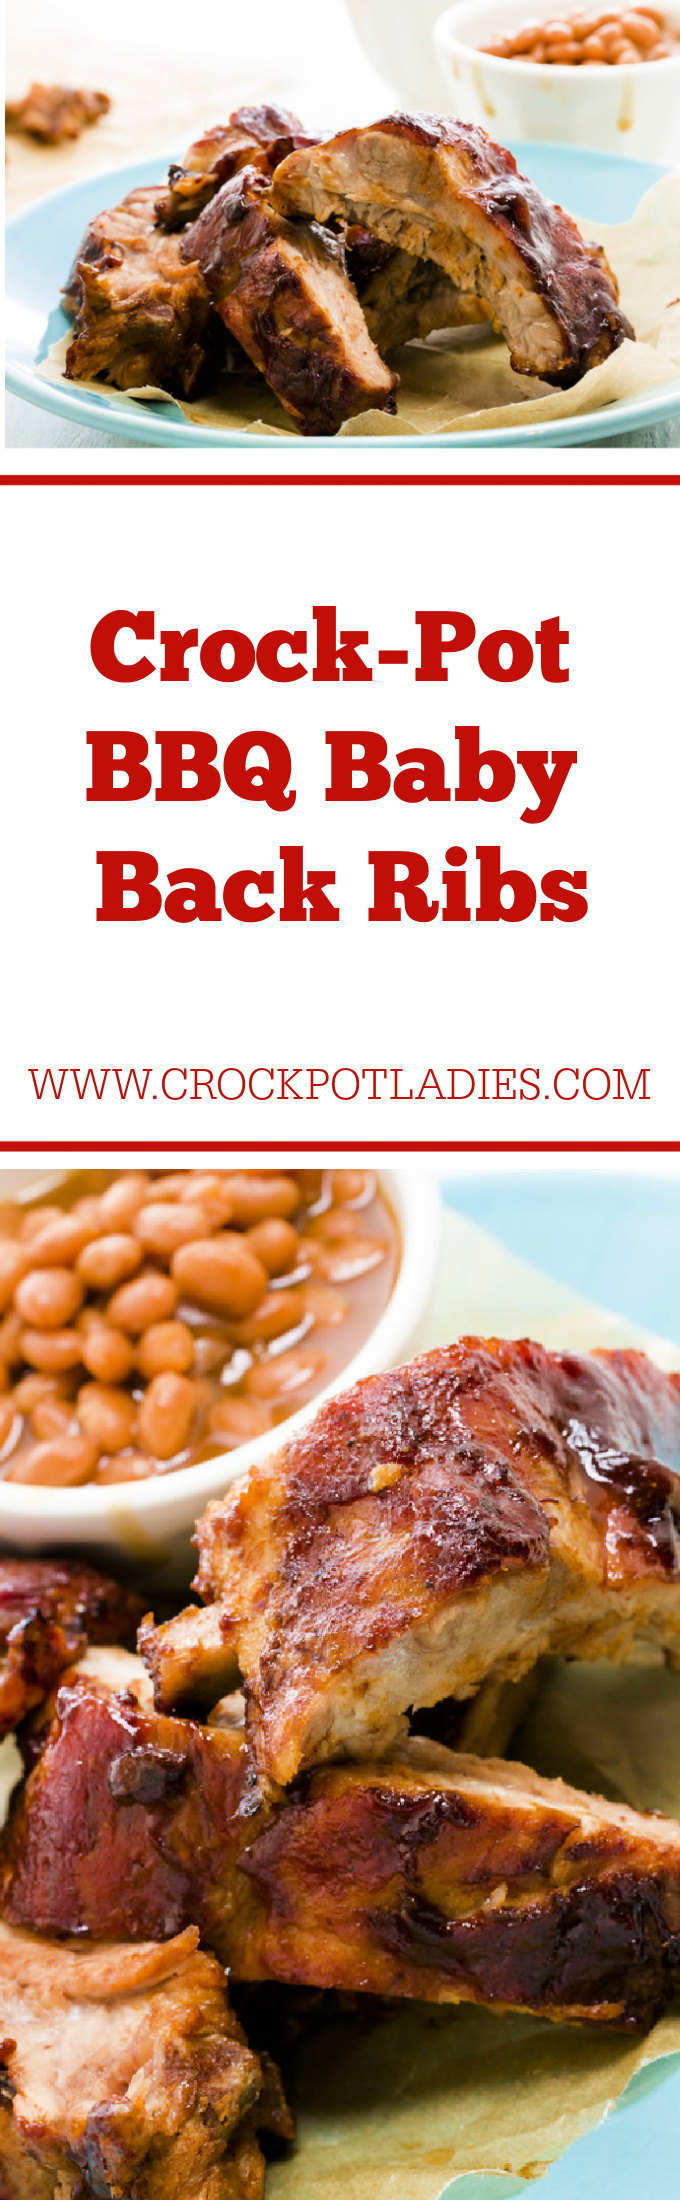 Crock-Pot BBQ Baby Back Ribs